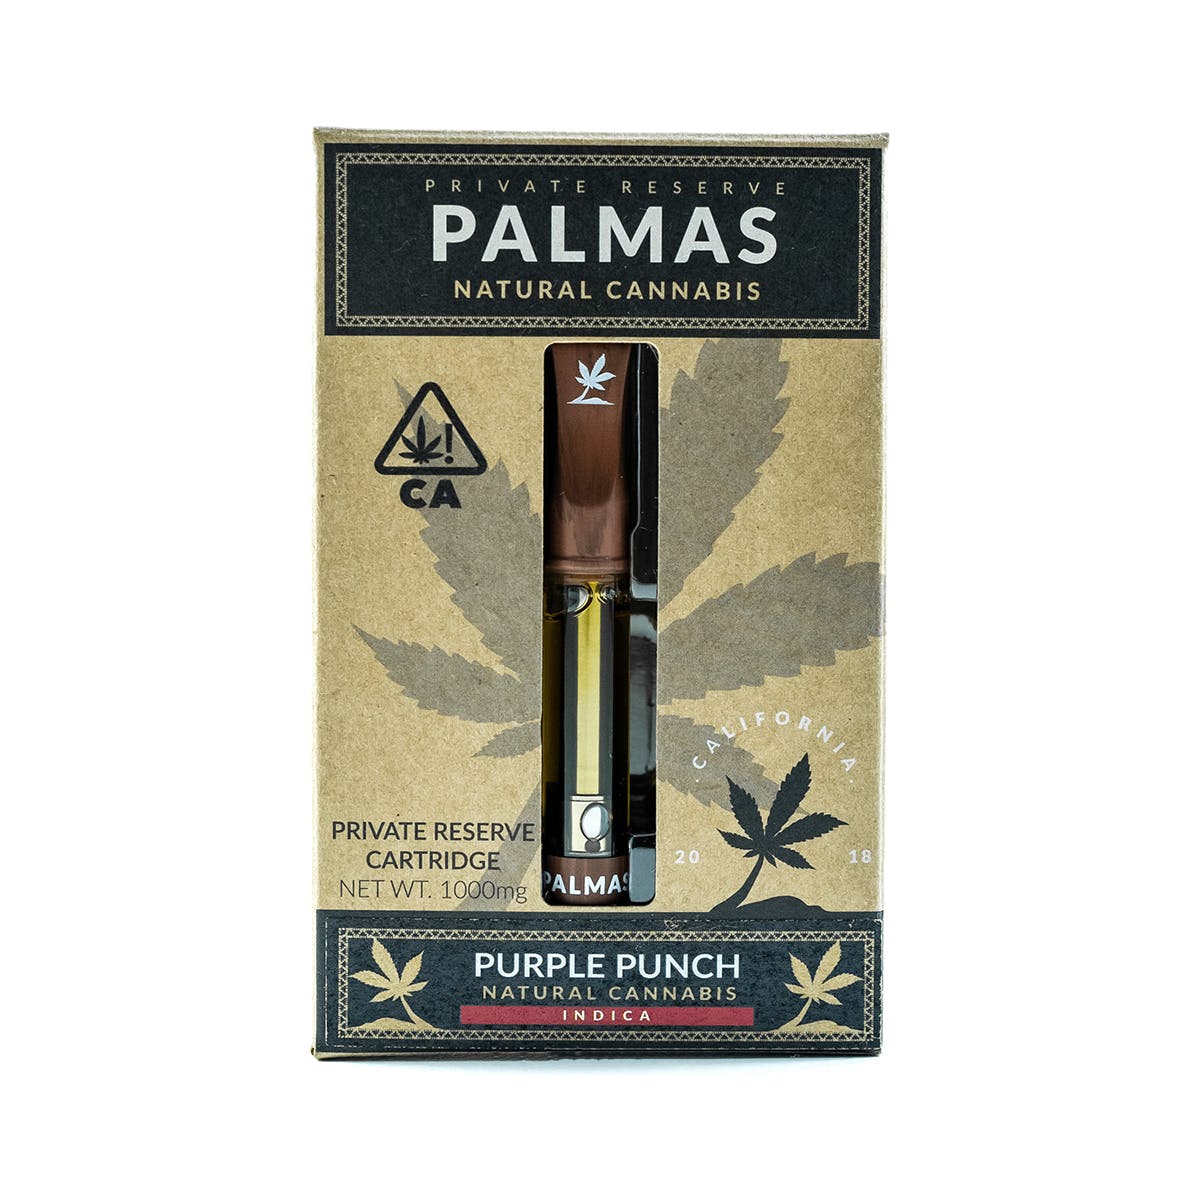 Palmas Private Reserve Cartridge - Purple Punch